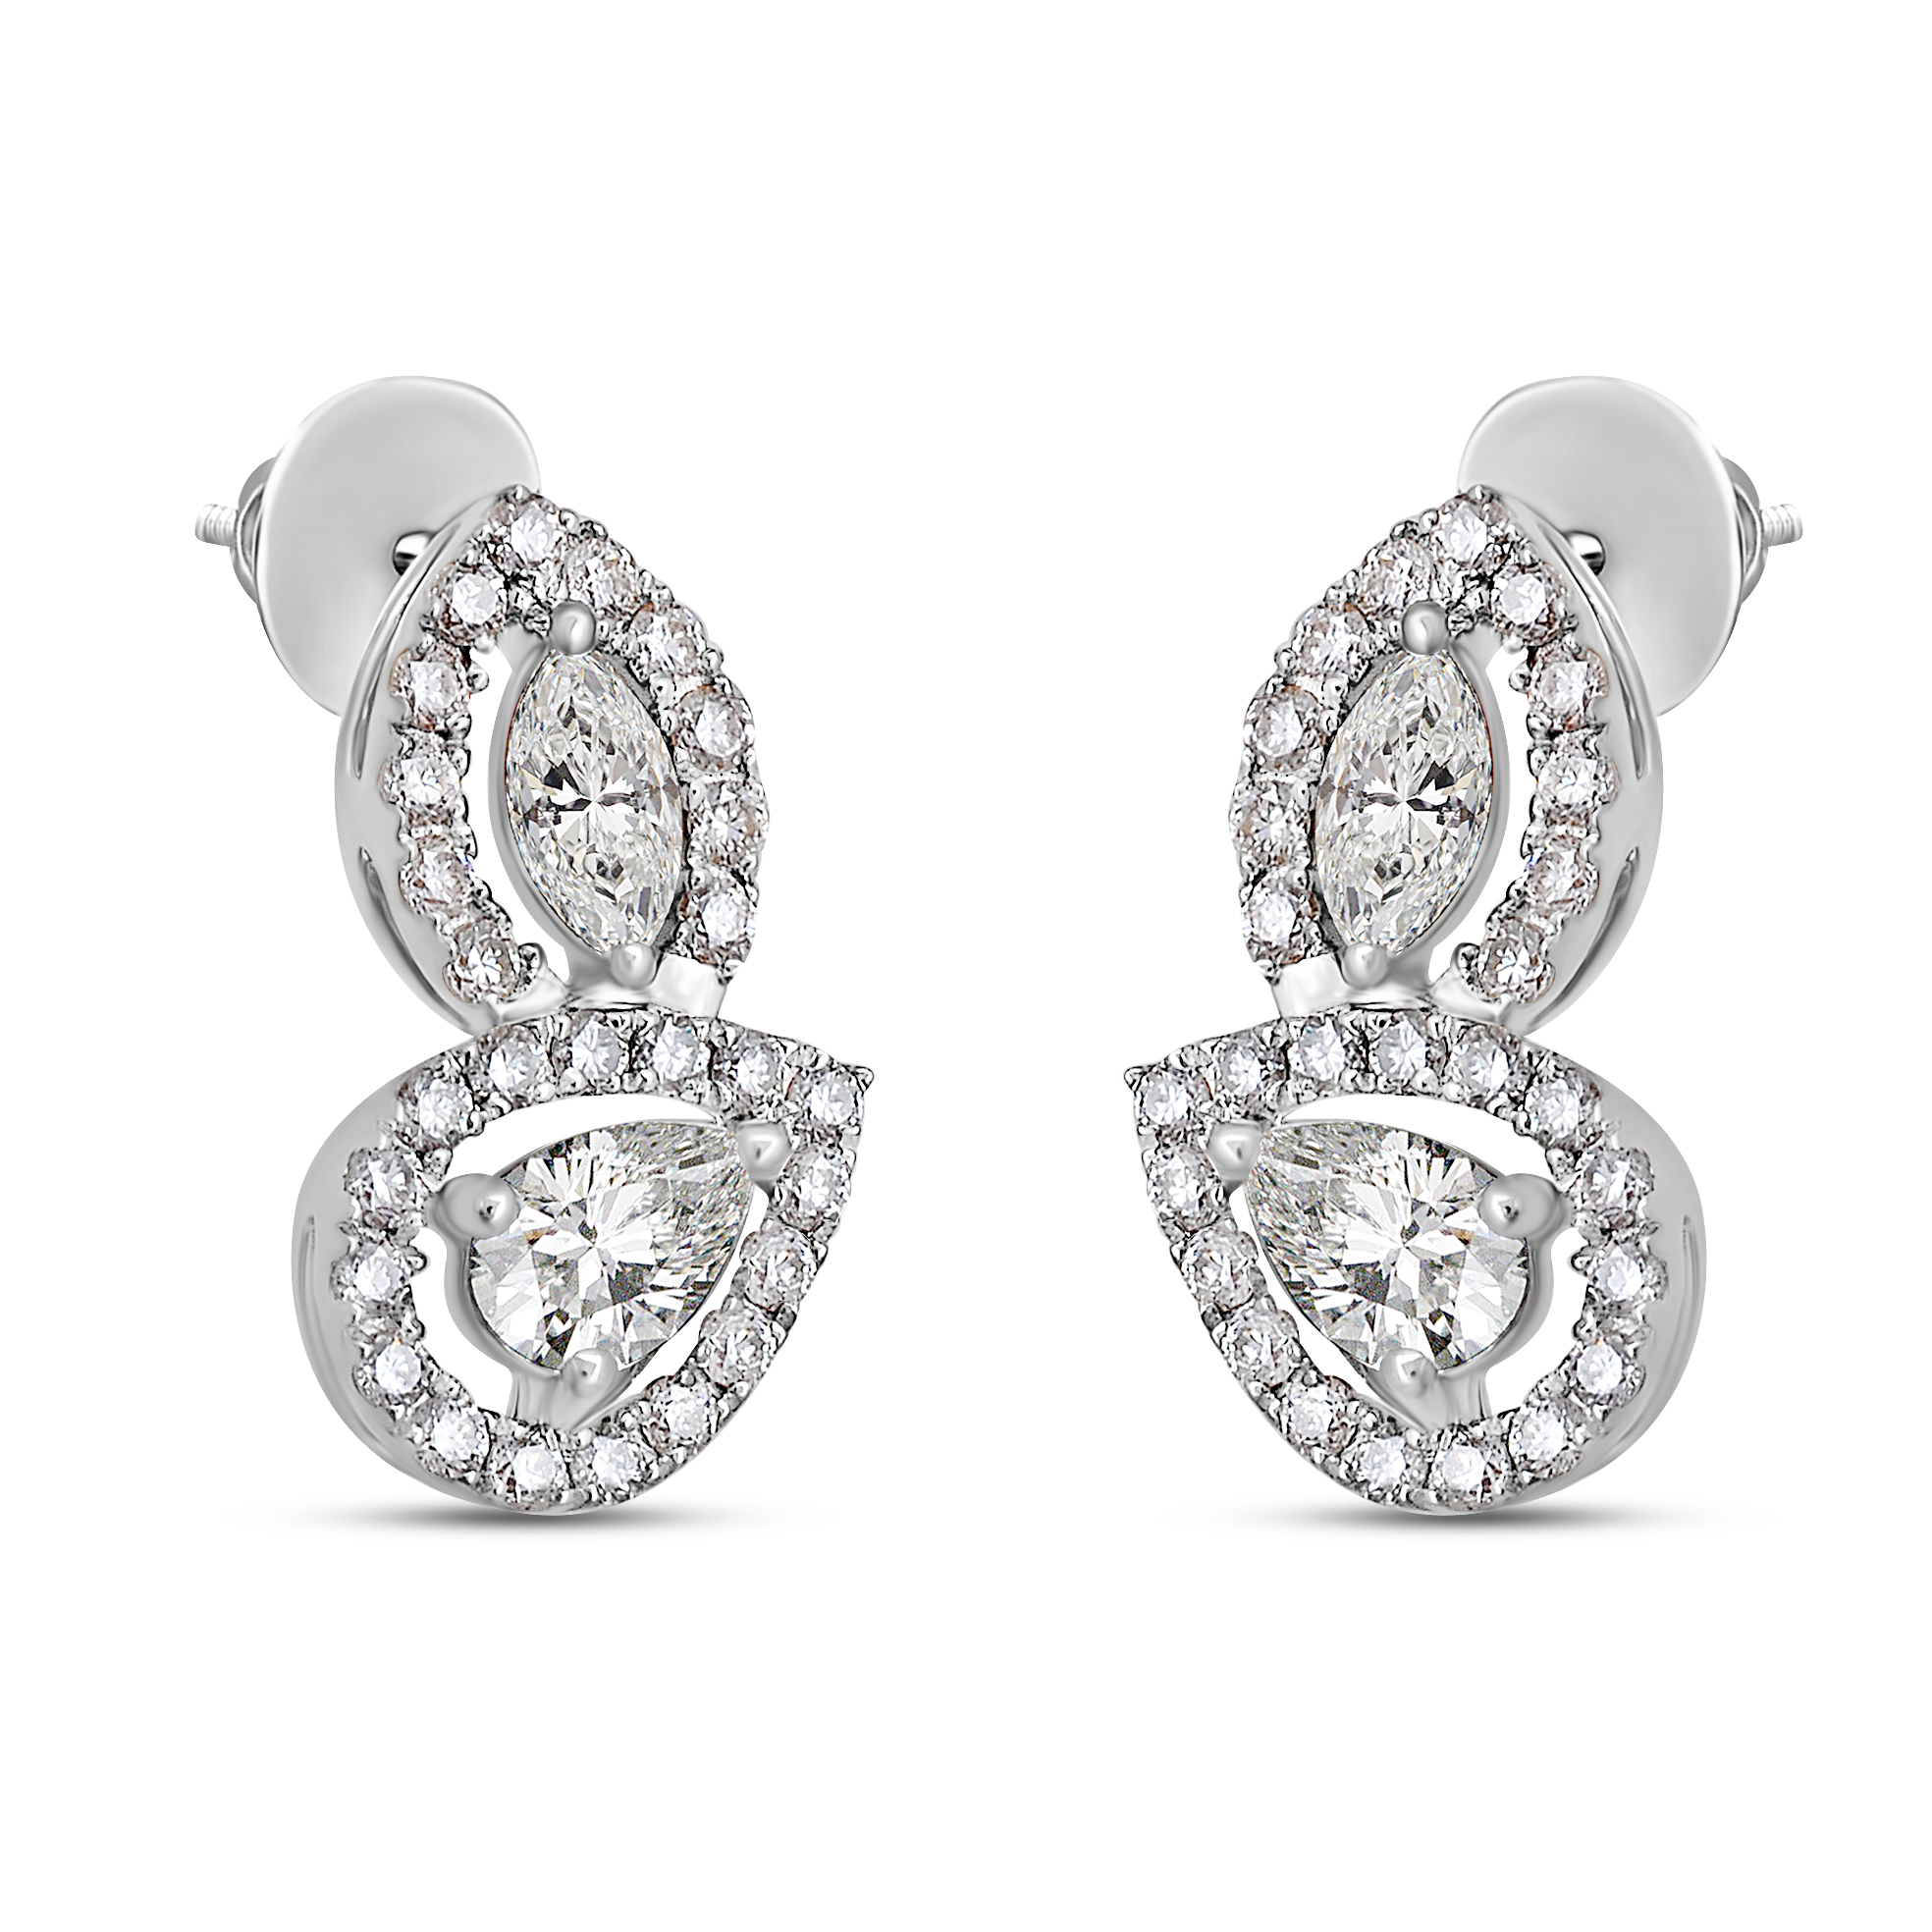 14ct White Gold 0.80 Carat Diamond Earrings